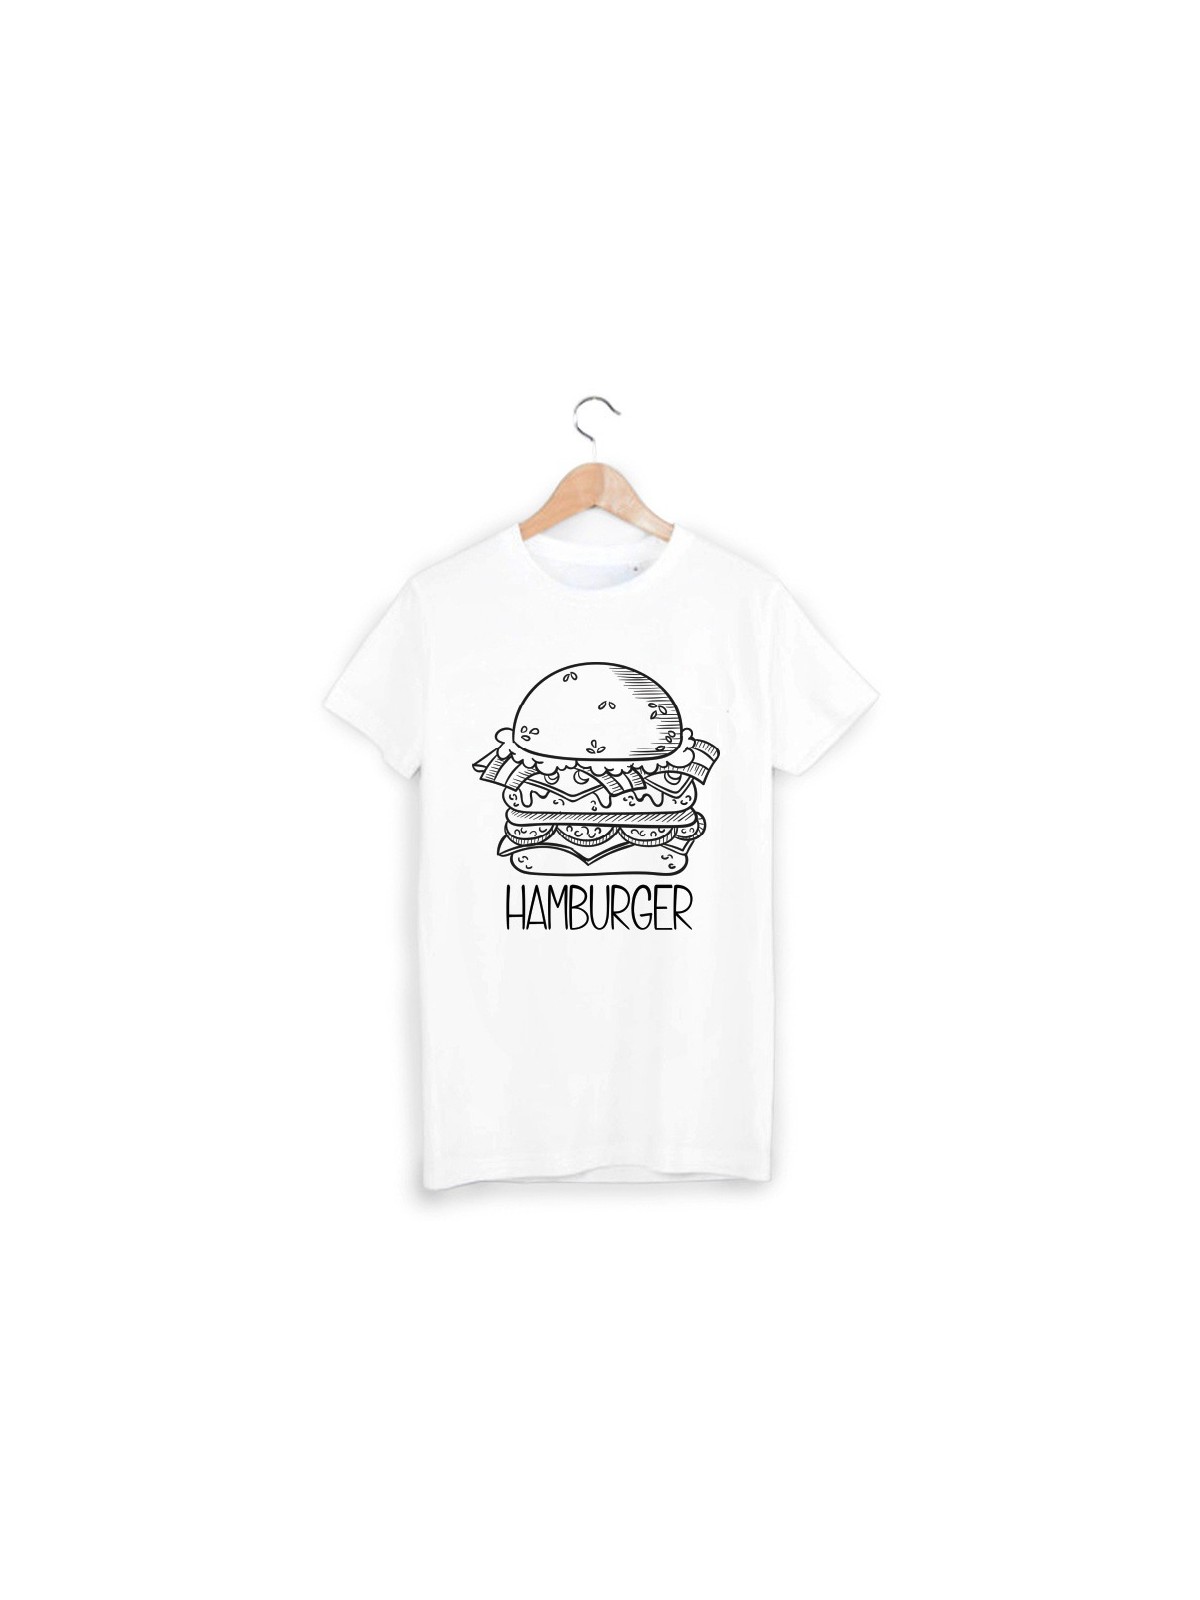 T-Shirt hamburger ref 895